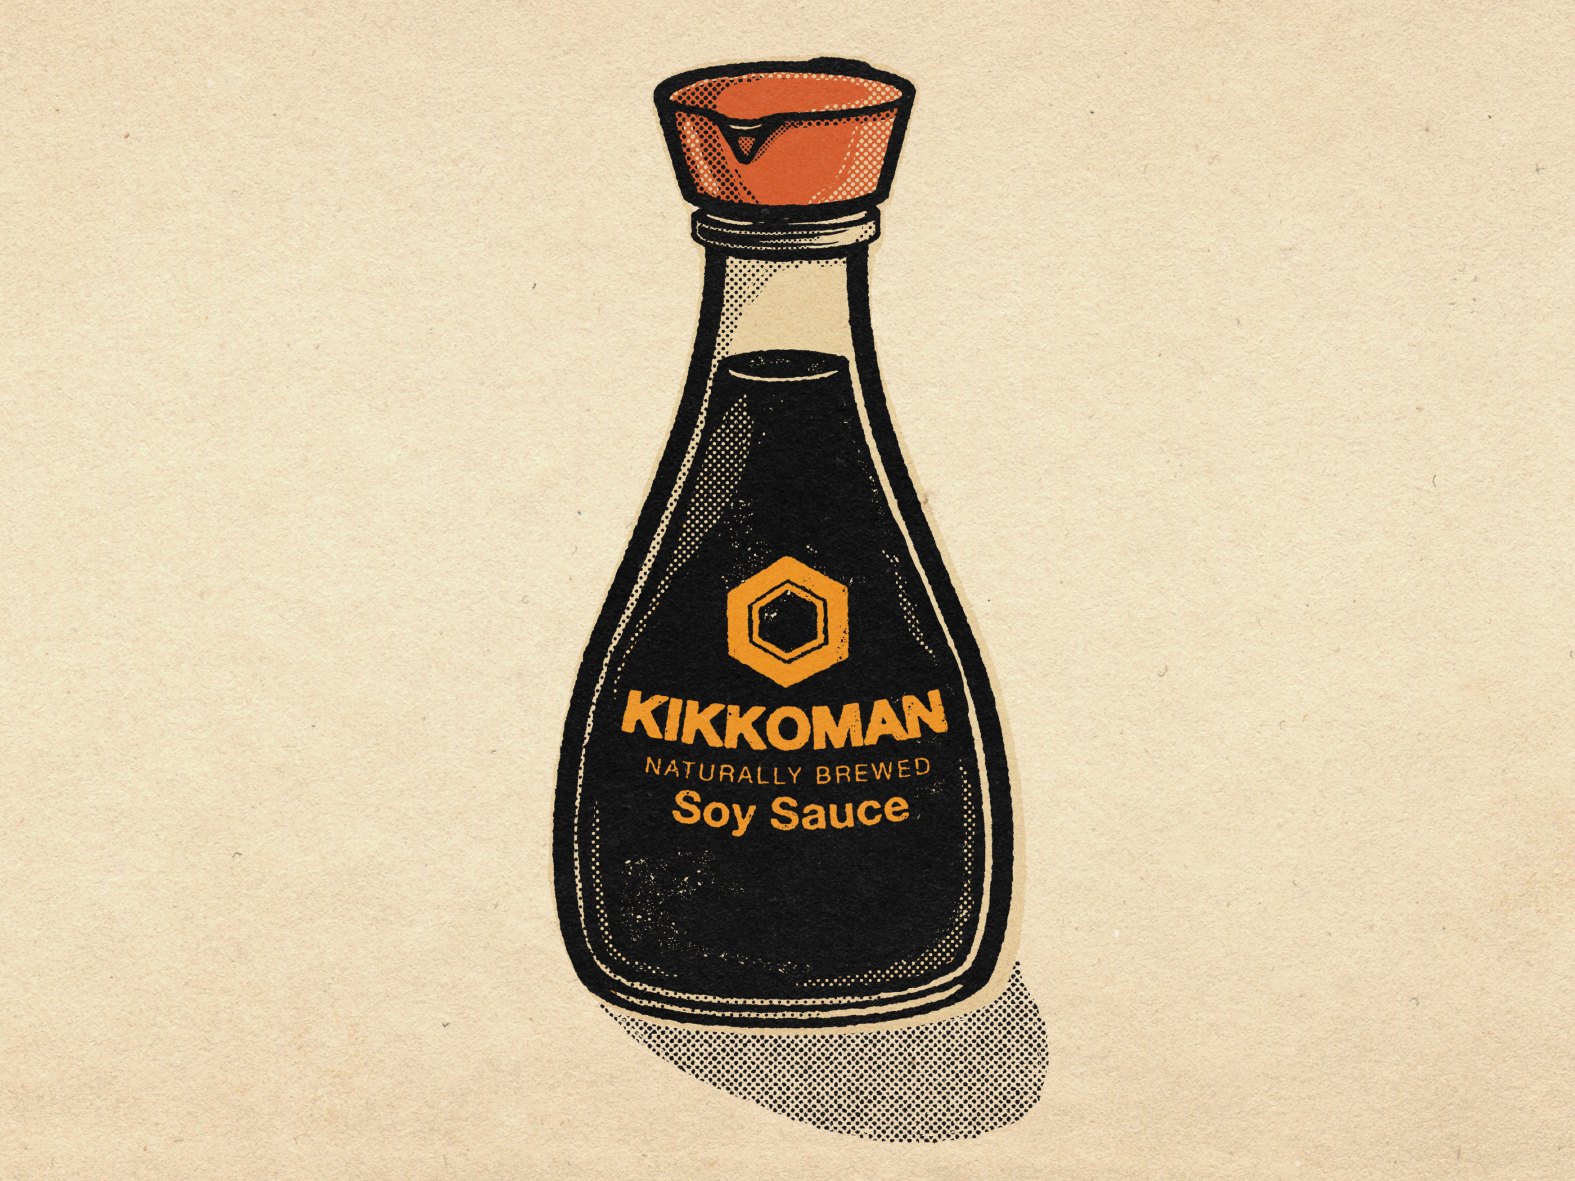 Kikkoman Soy Sauce by Michiel van den Berg on Dribbble